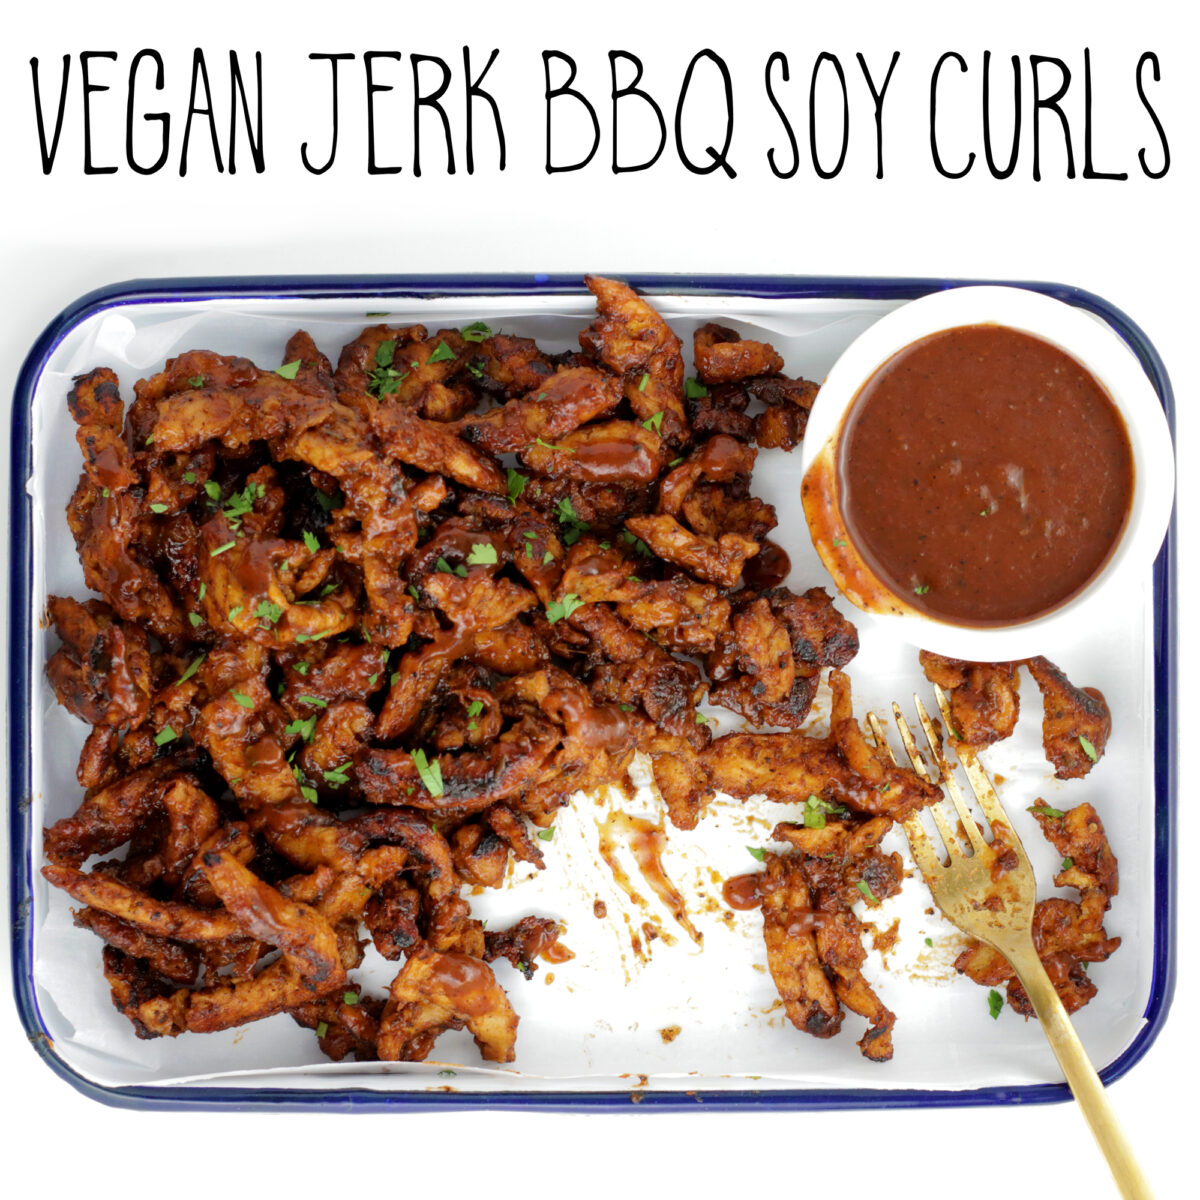 Vegan Jerk BBQ Soy Curls